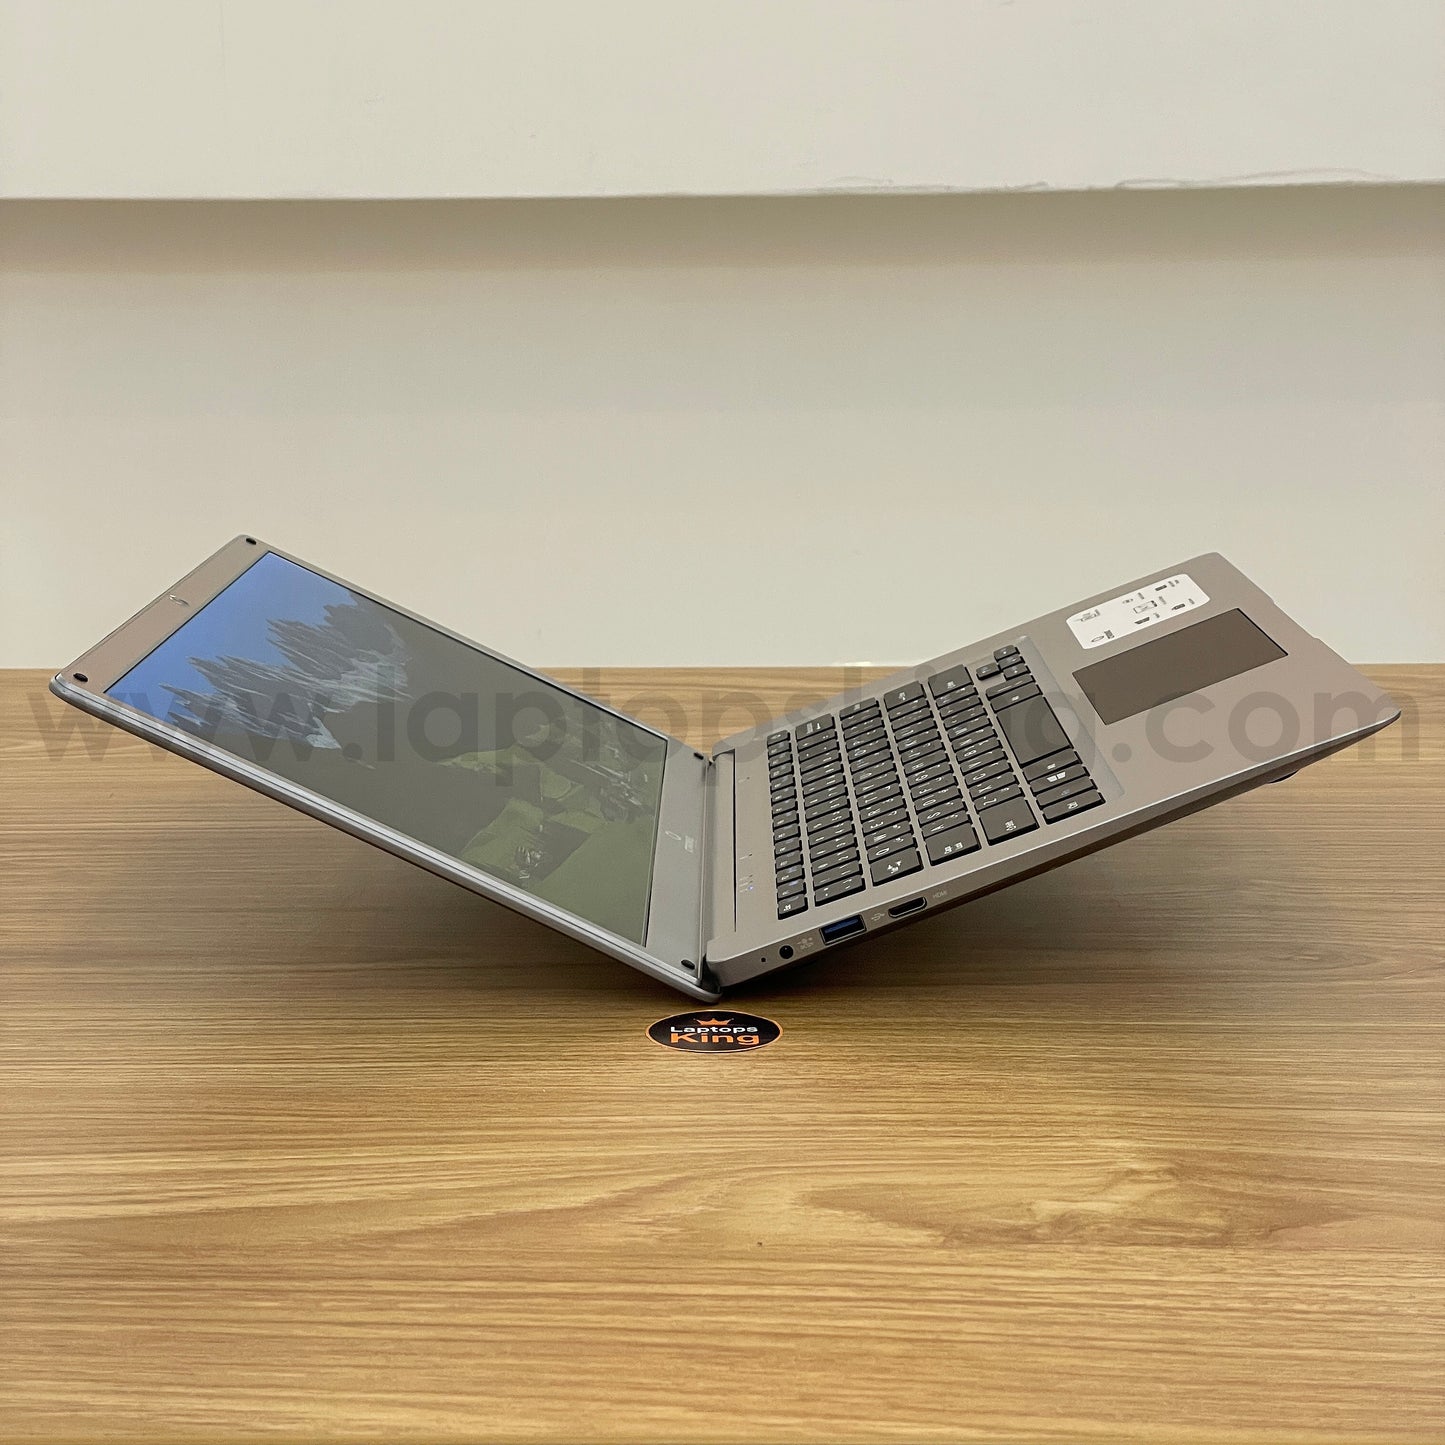 Ctroniq N14x 14.1" DC Laptop (Brand New Sealed)